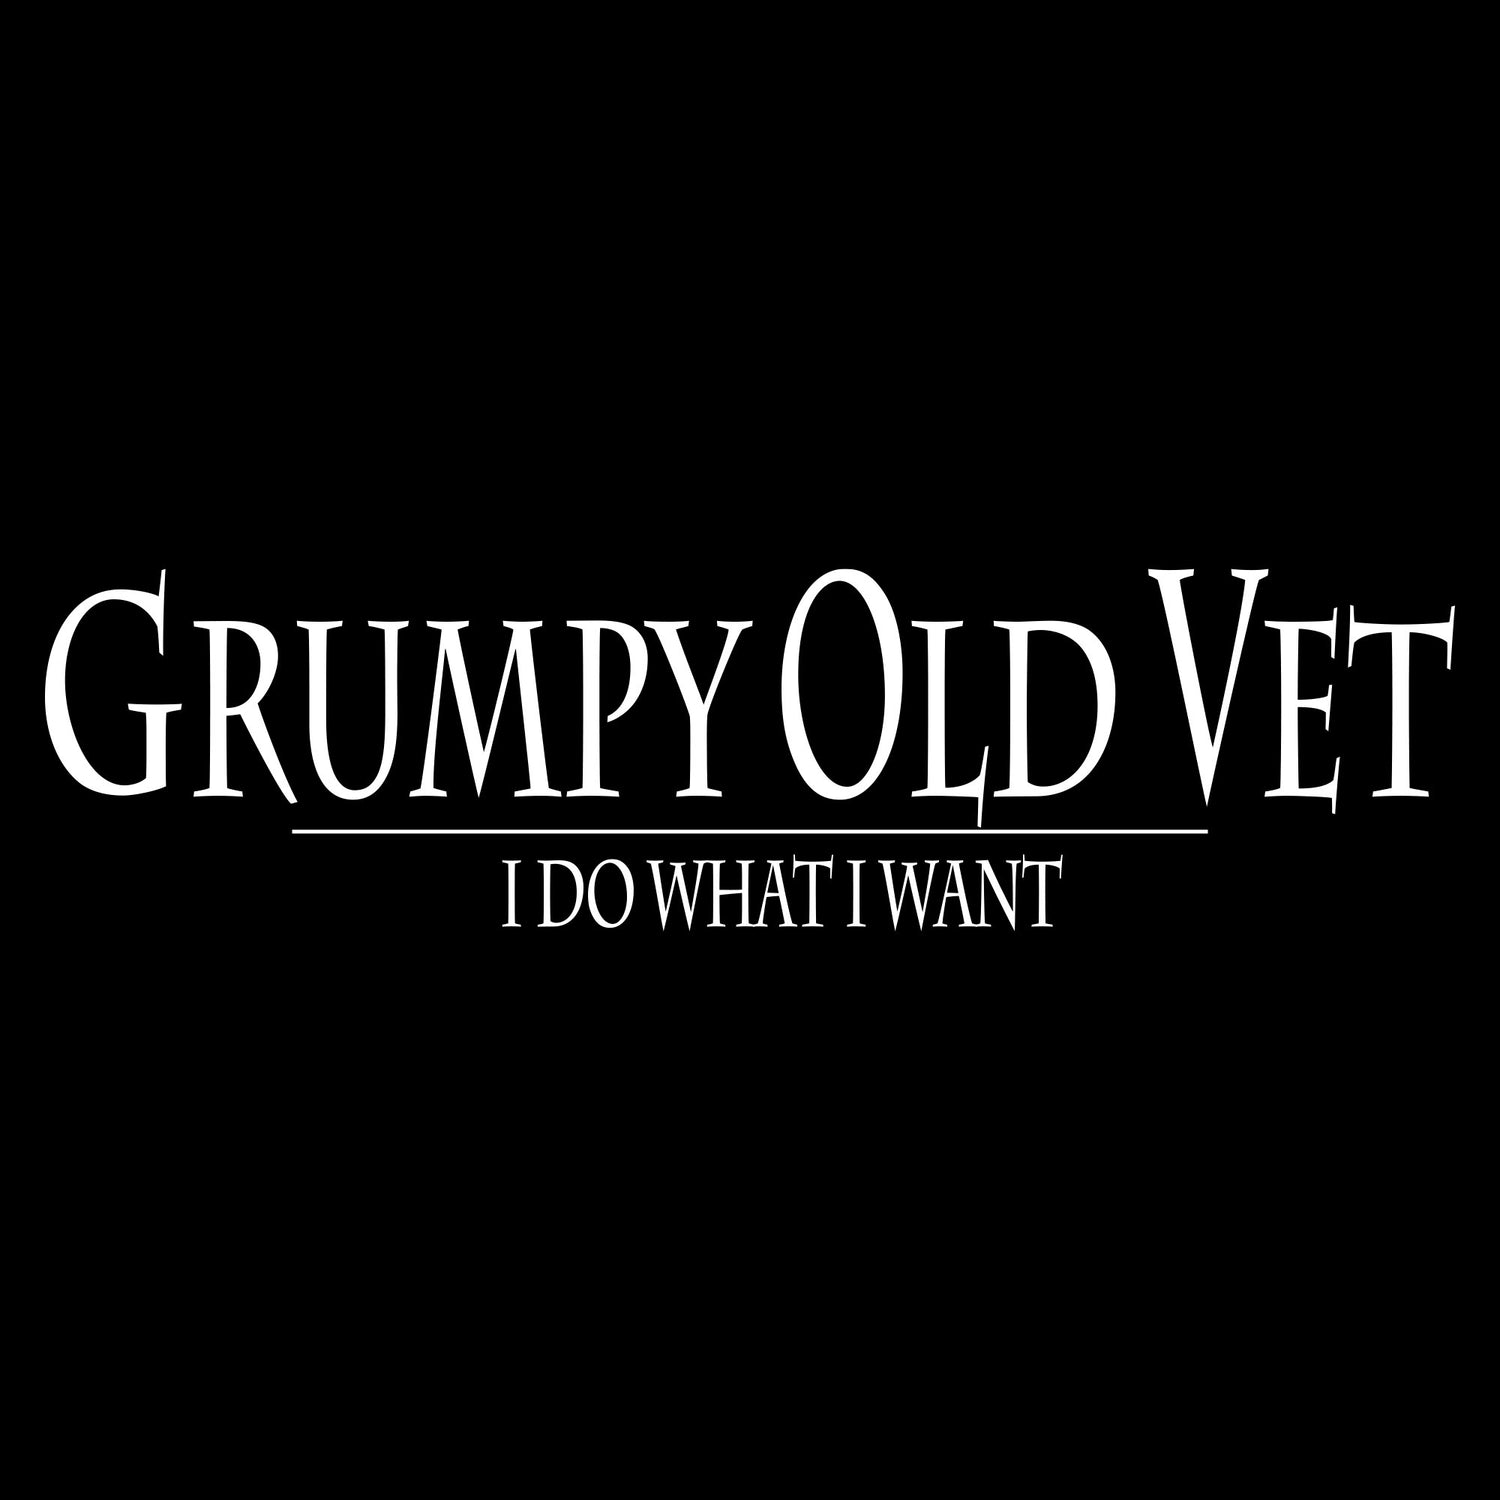 Grumpy Old Vet in Black | Veterans Apparel 